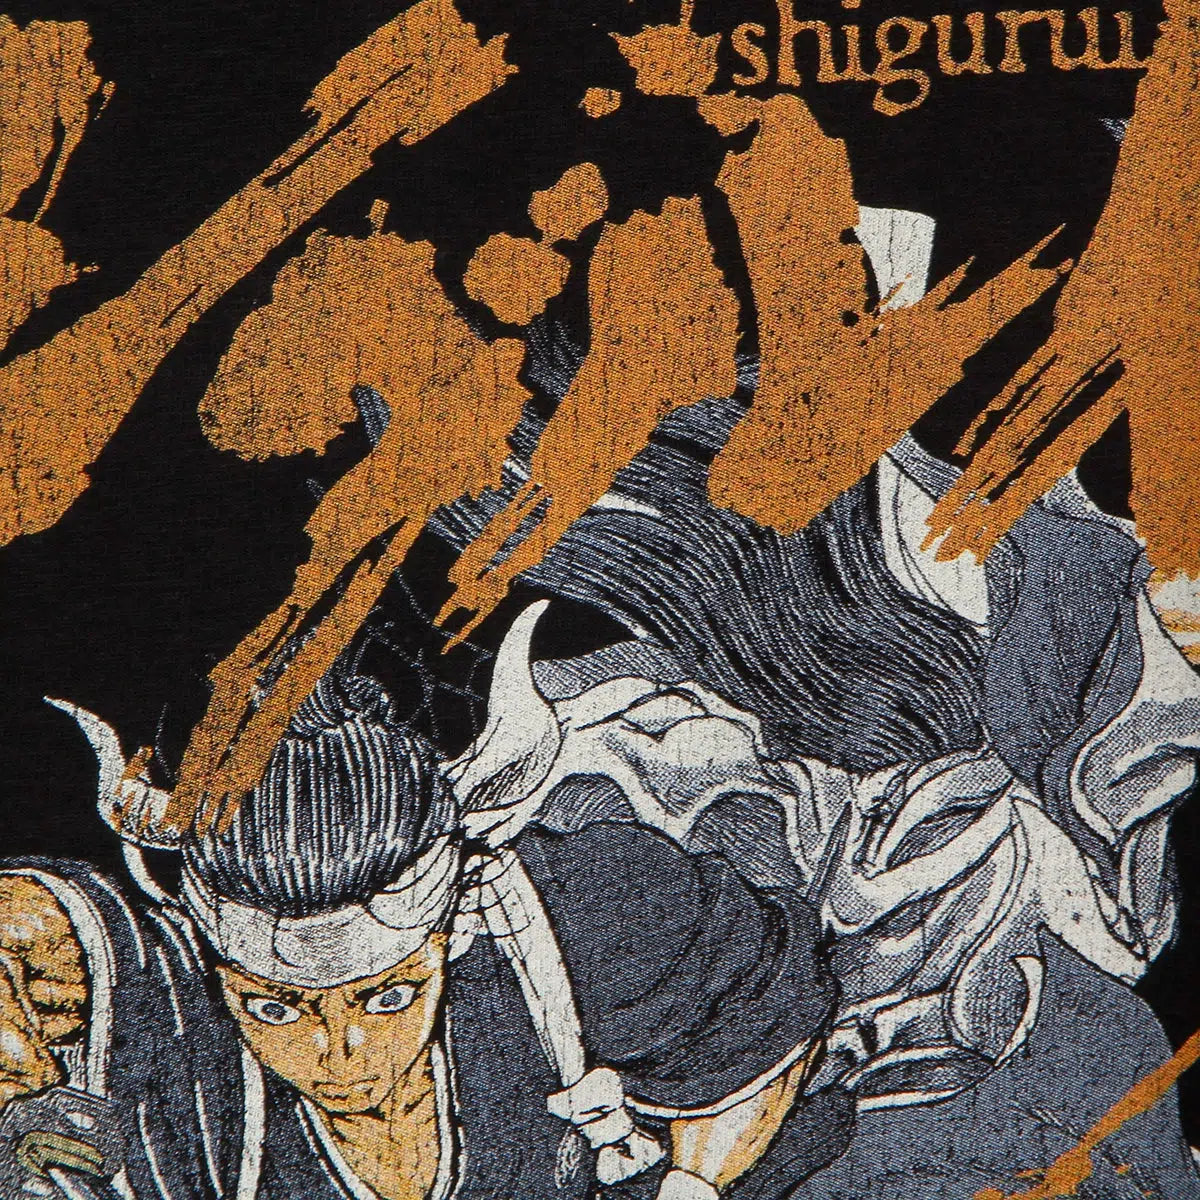 Vintage Shigurui Dead Beast Claws Tee